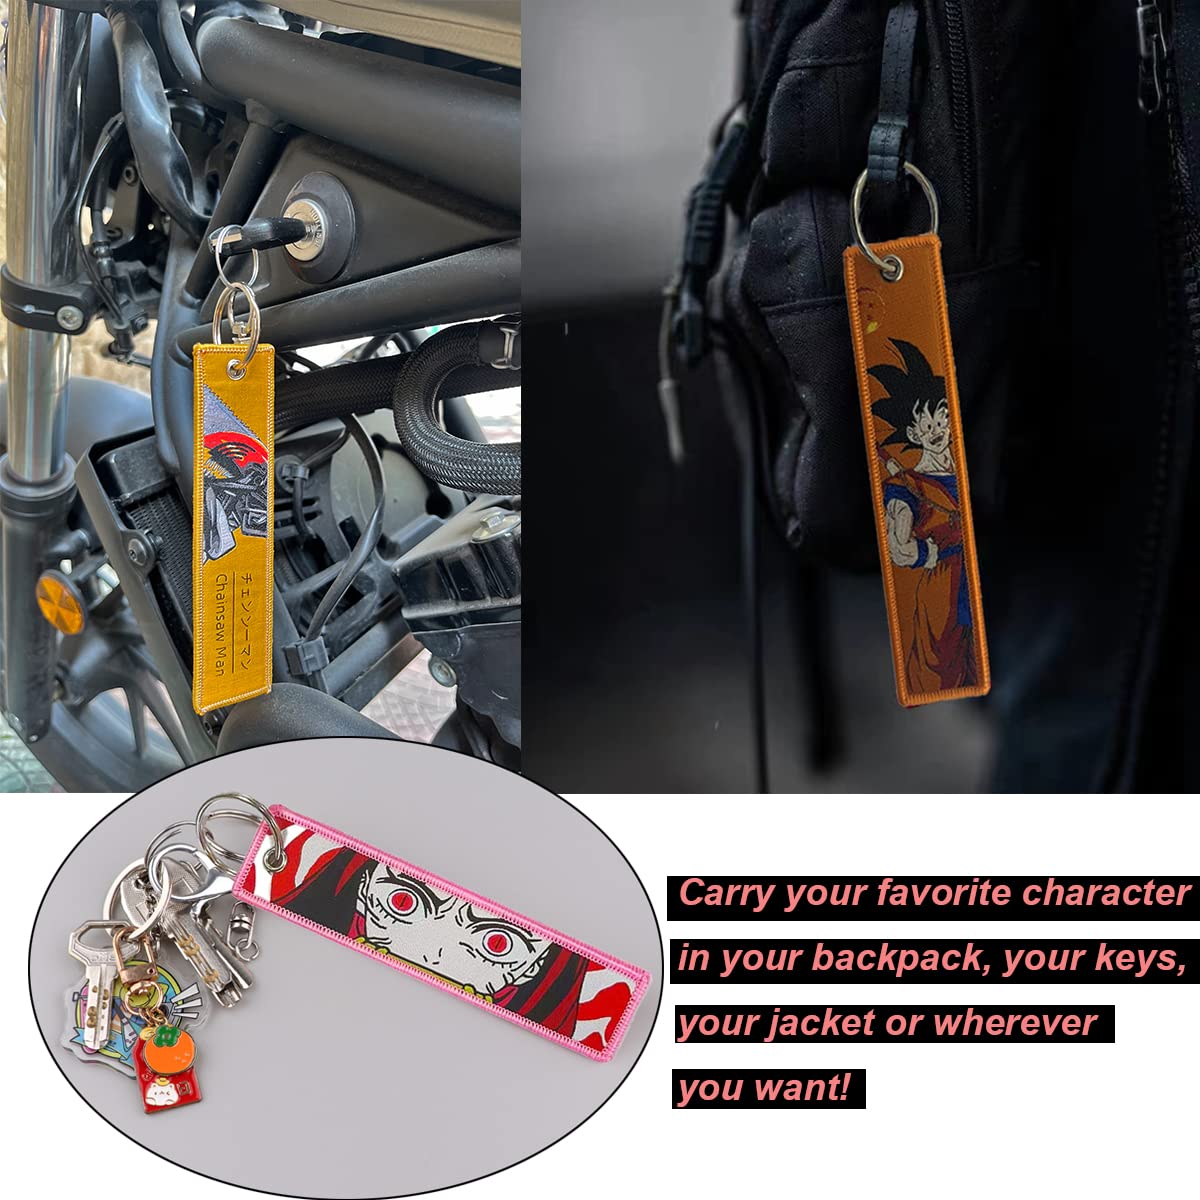 PERSONA 5 Anime keychain Acrylic strap/charms/Key ring D326 - AliExpress